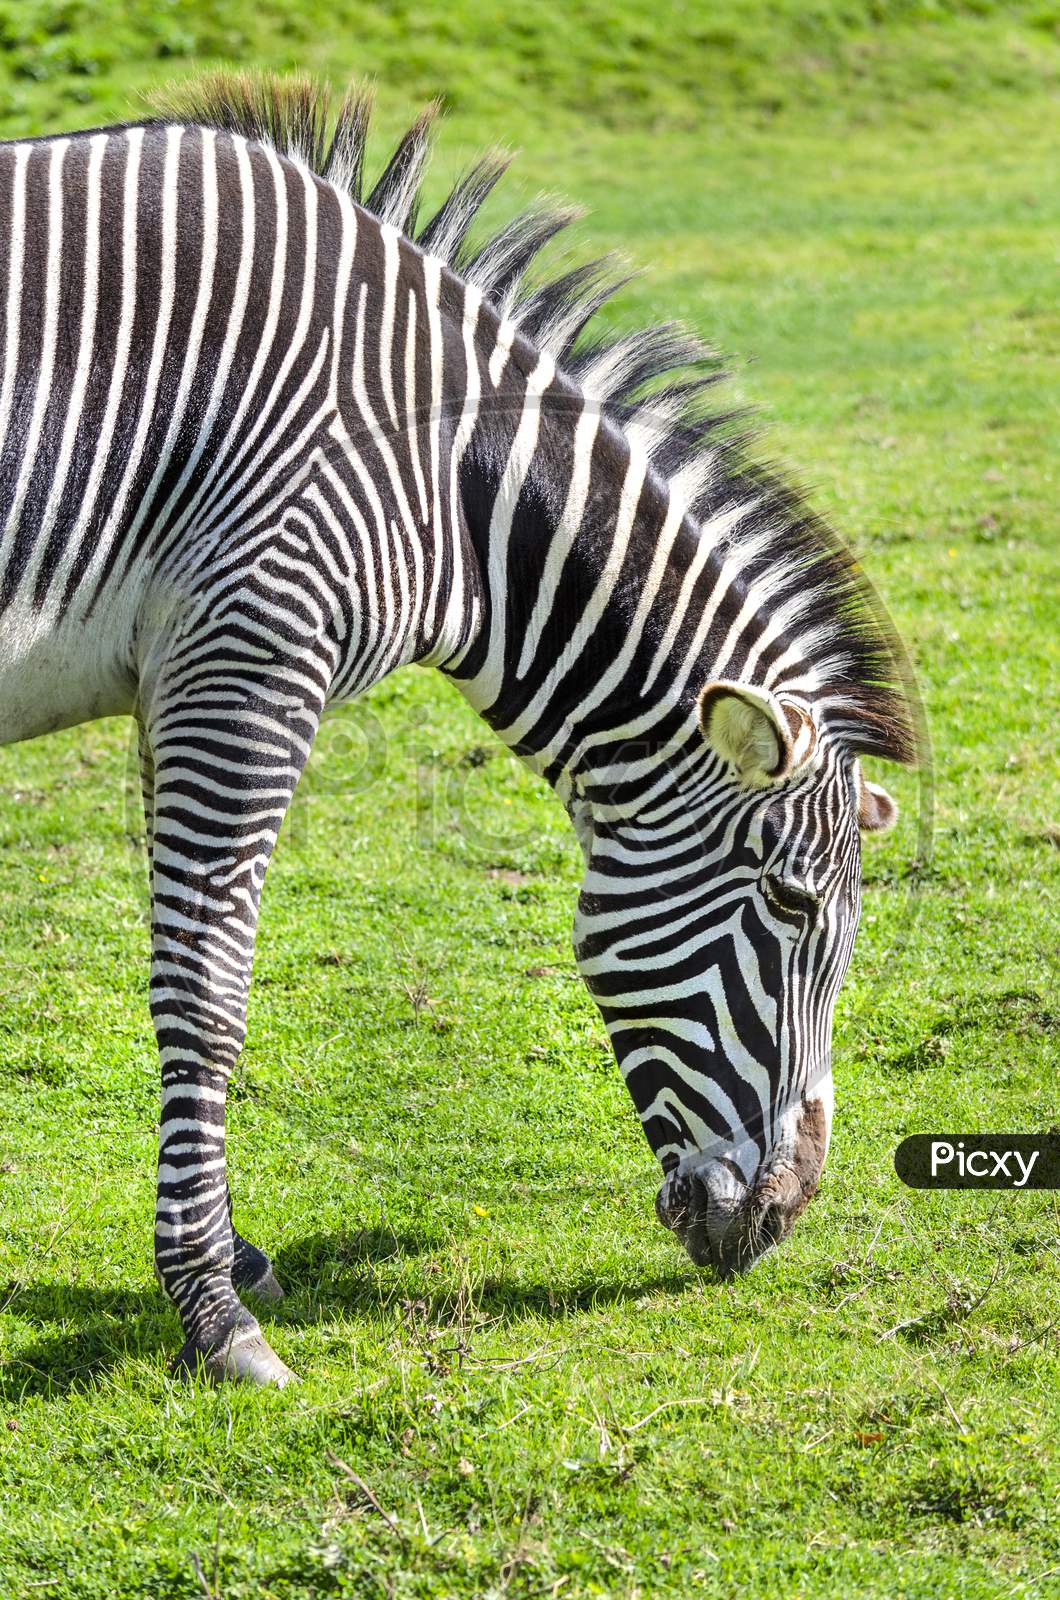 A Grevy's Zebra grazing. Its natural habitat is semi-arid grasslands of east Africa.